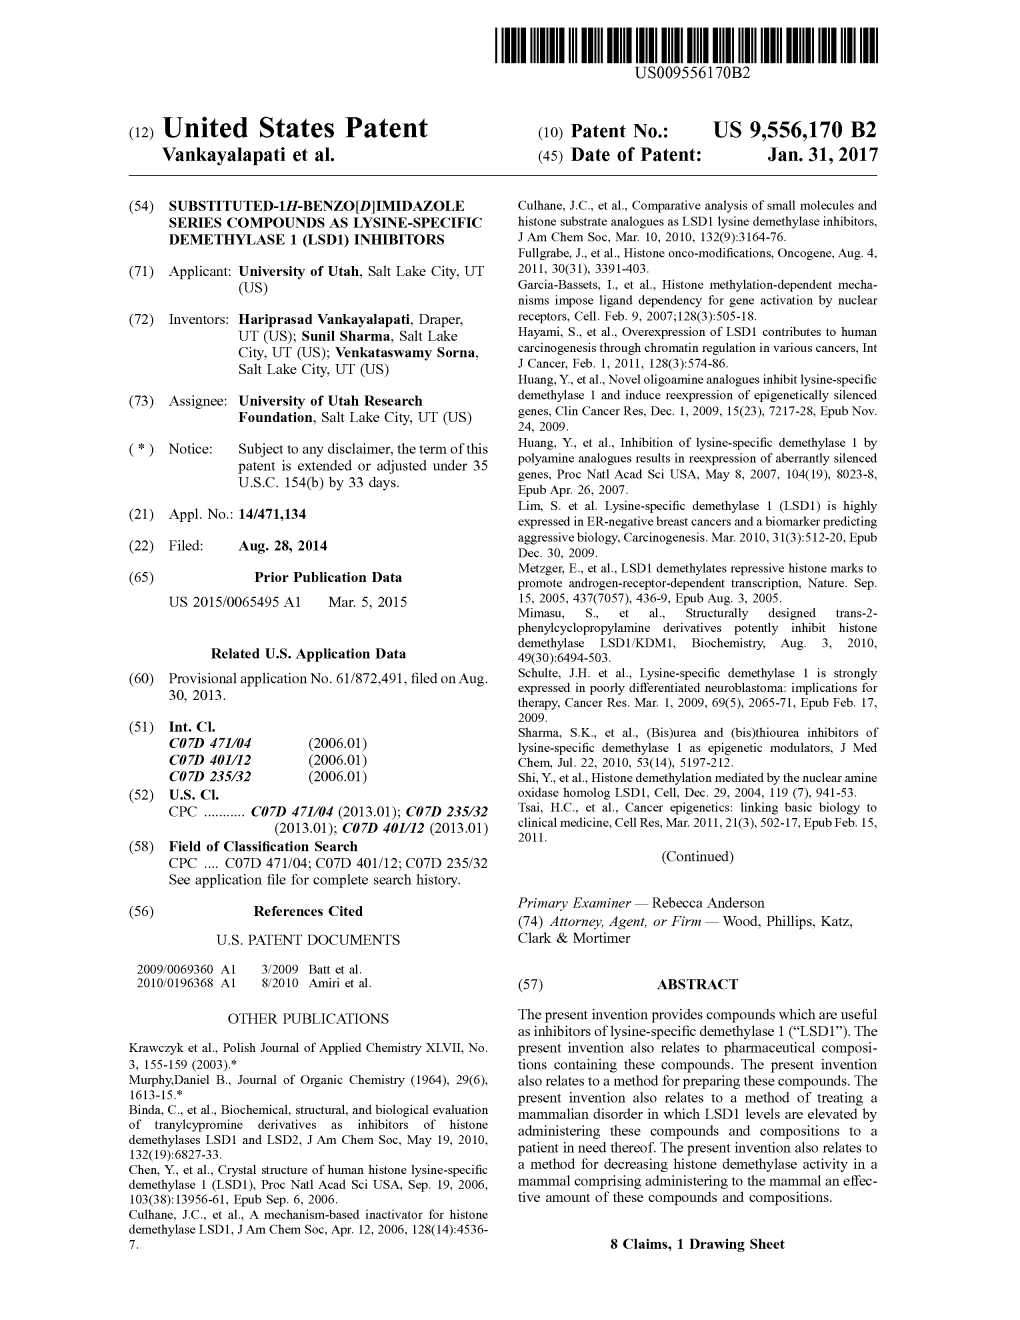 (12) United States Patent (10) Patent No.: US 9,556,170 B2 Vankayalapati Et Al